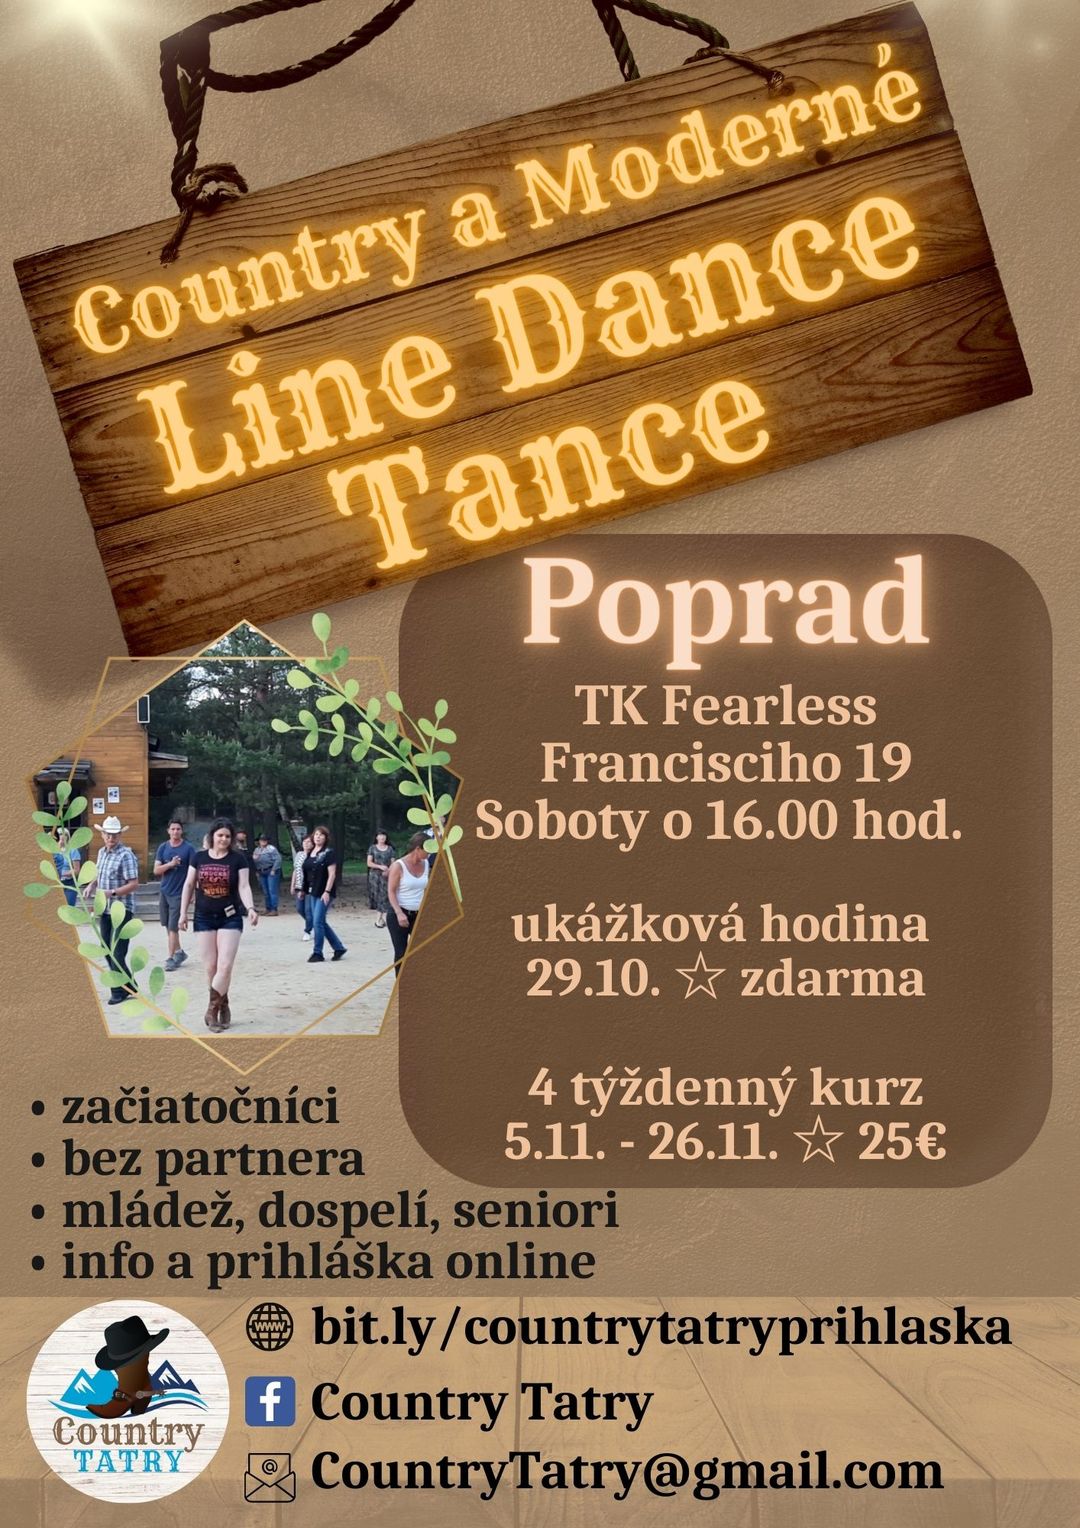 Poprad Line Dance tance - 4 týždenný kurz